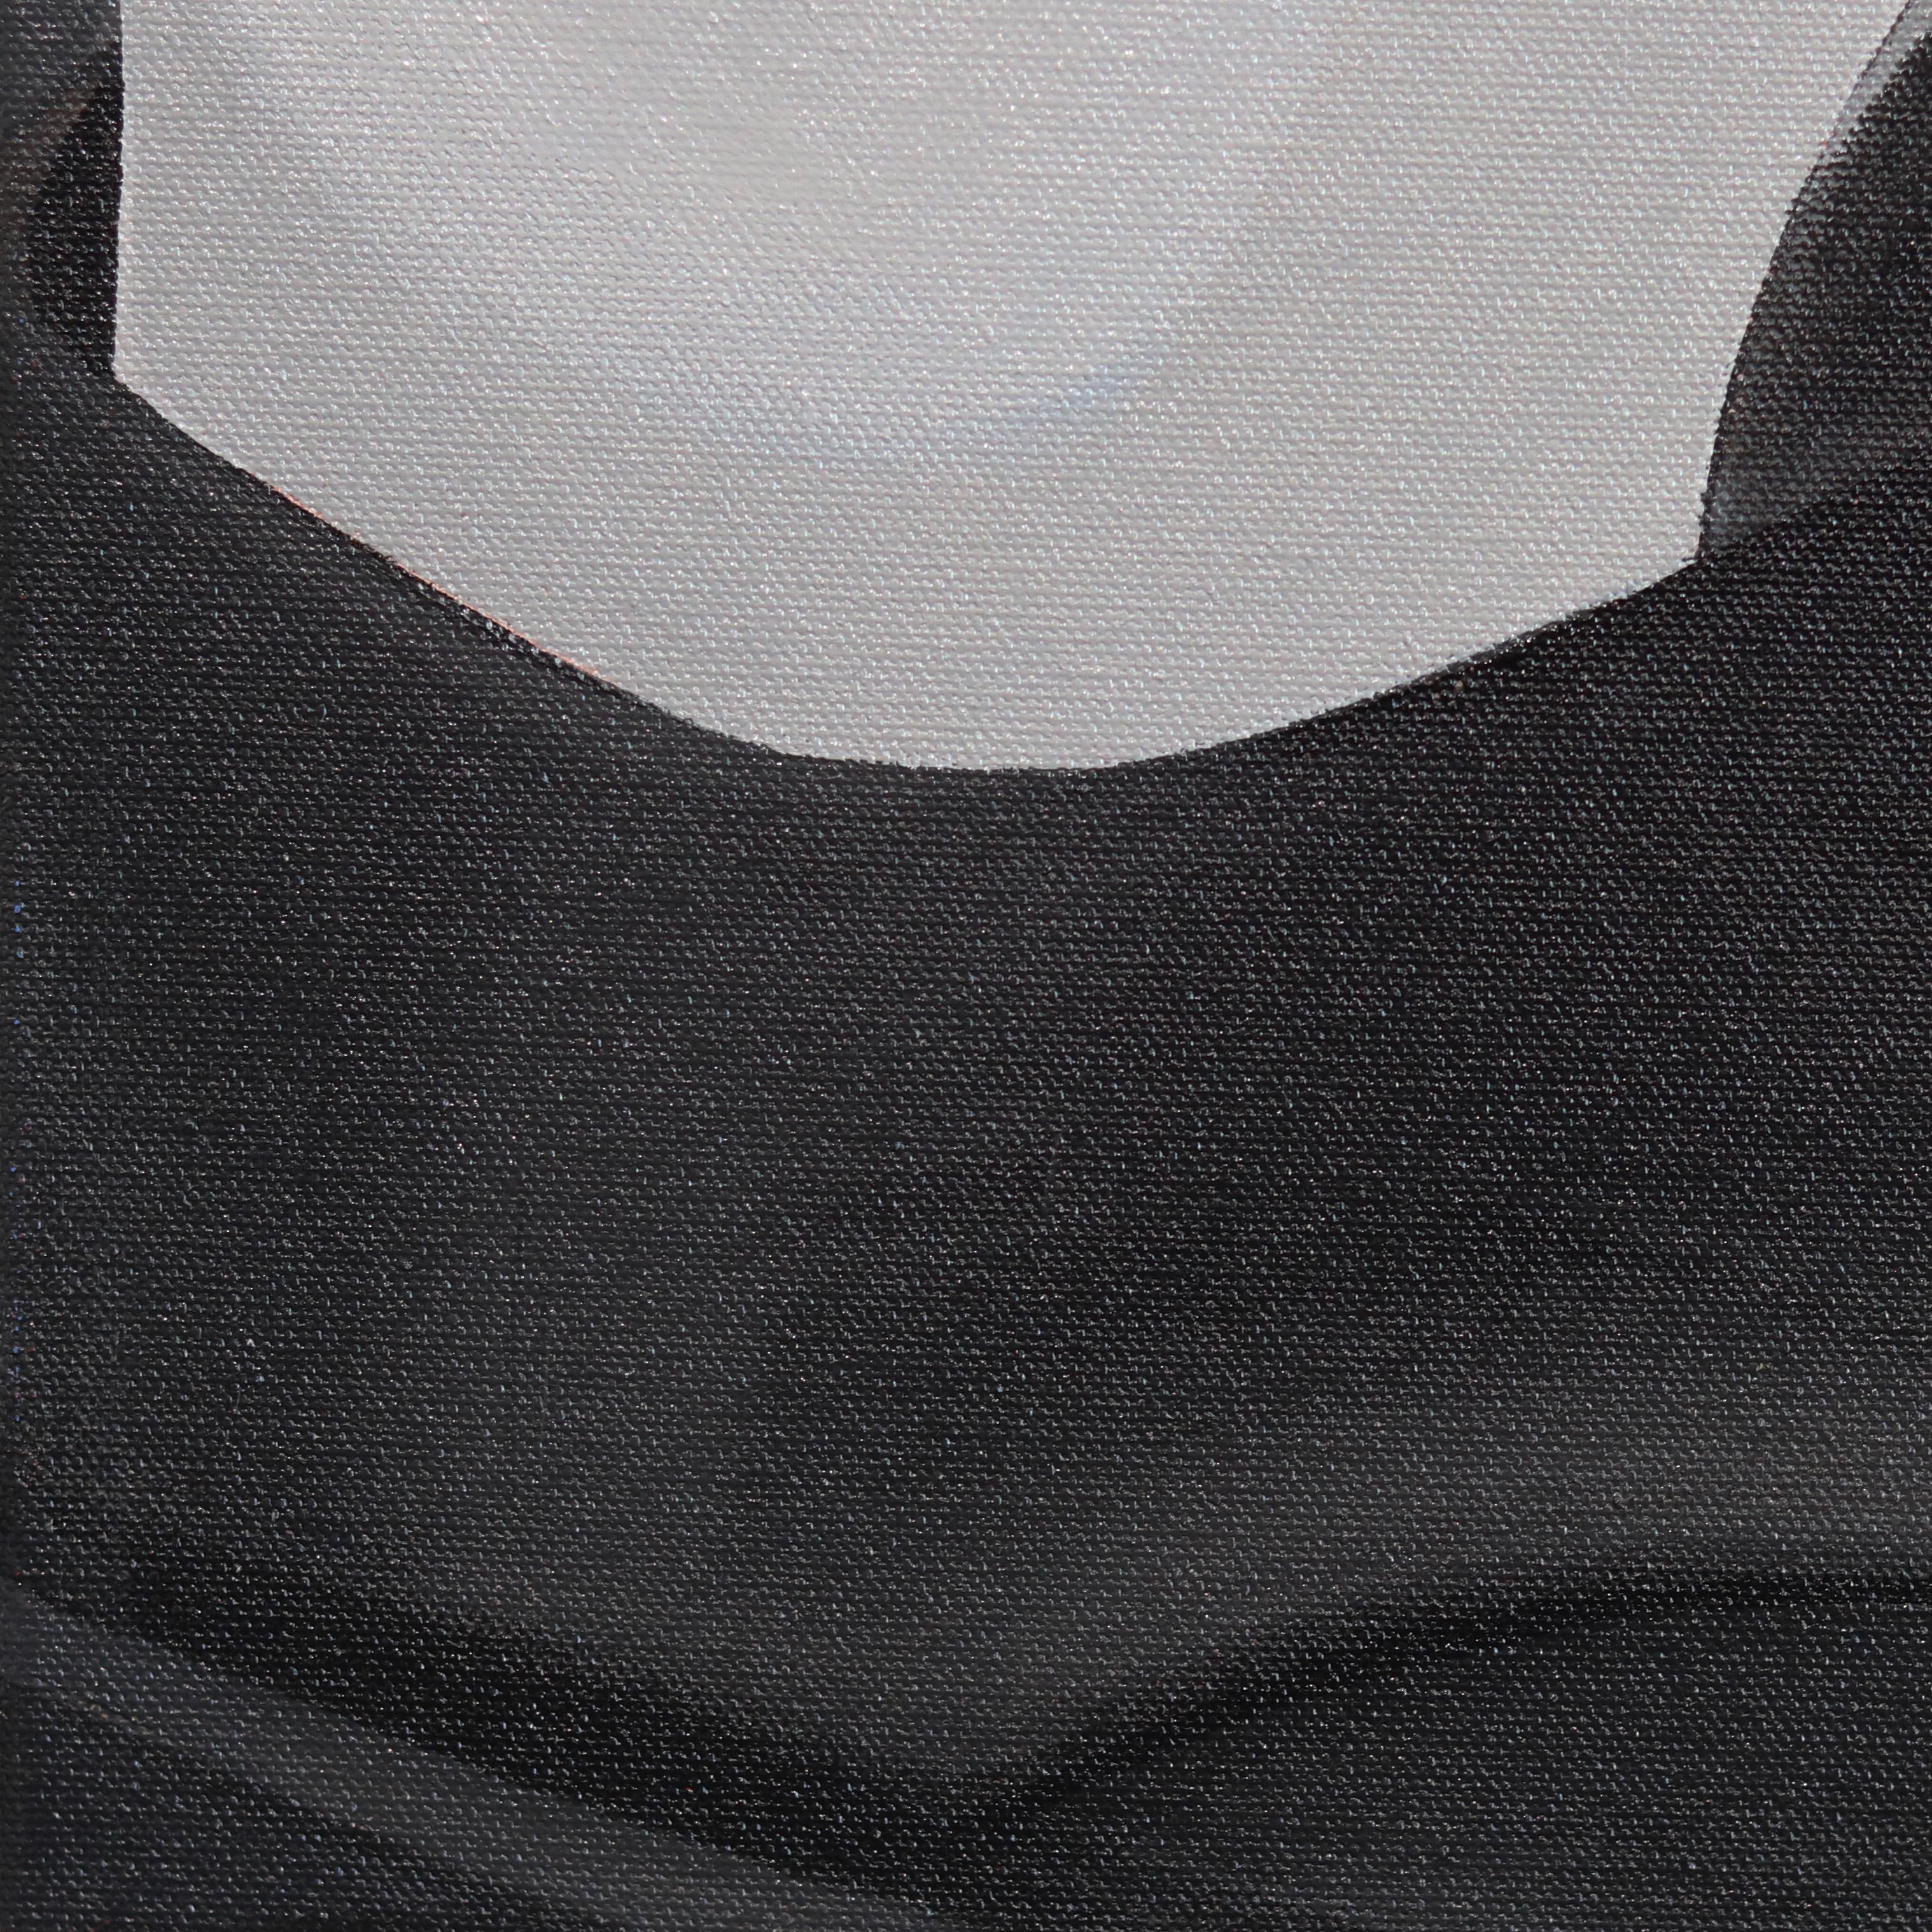 The White Socks - Pop Art Minimalist Monochrome Original Artwork on Canvas For Sale 6